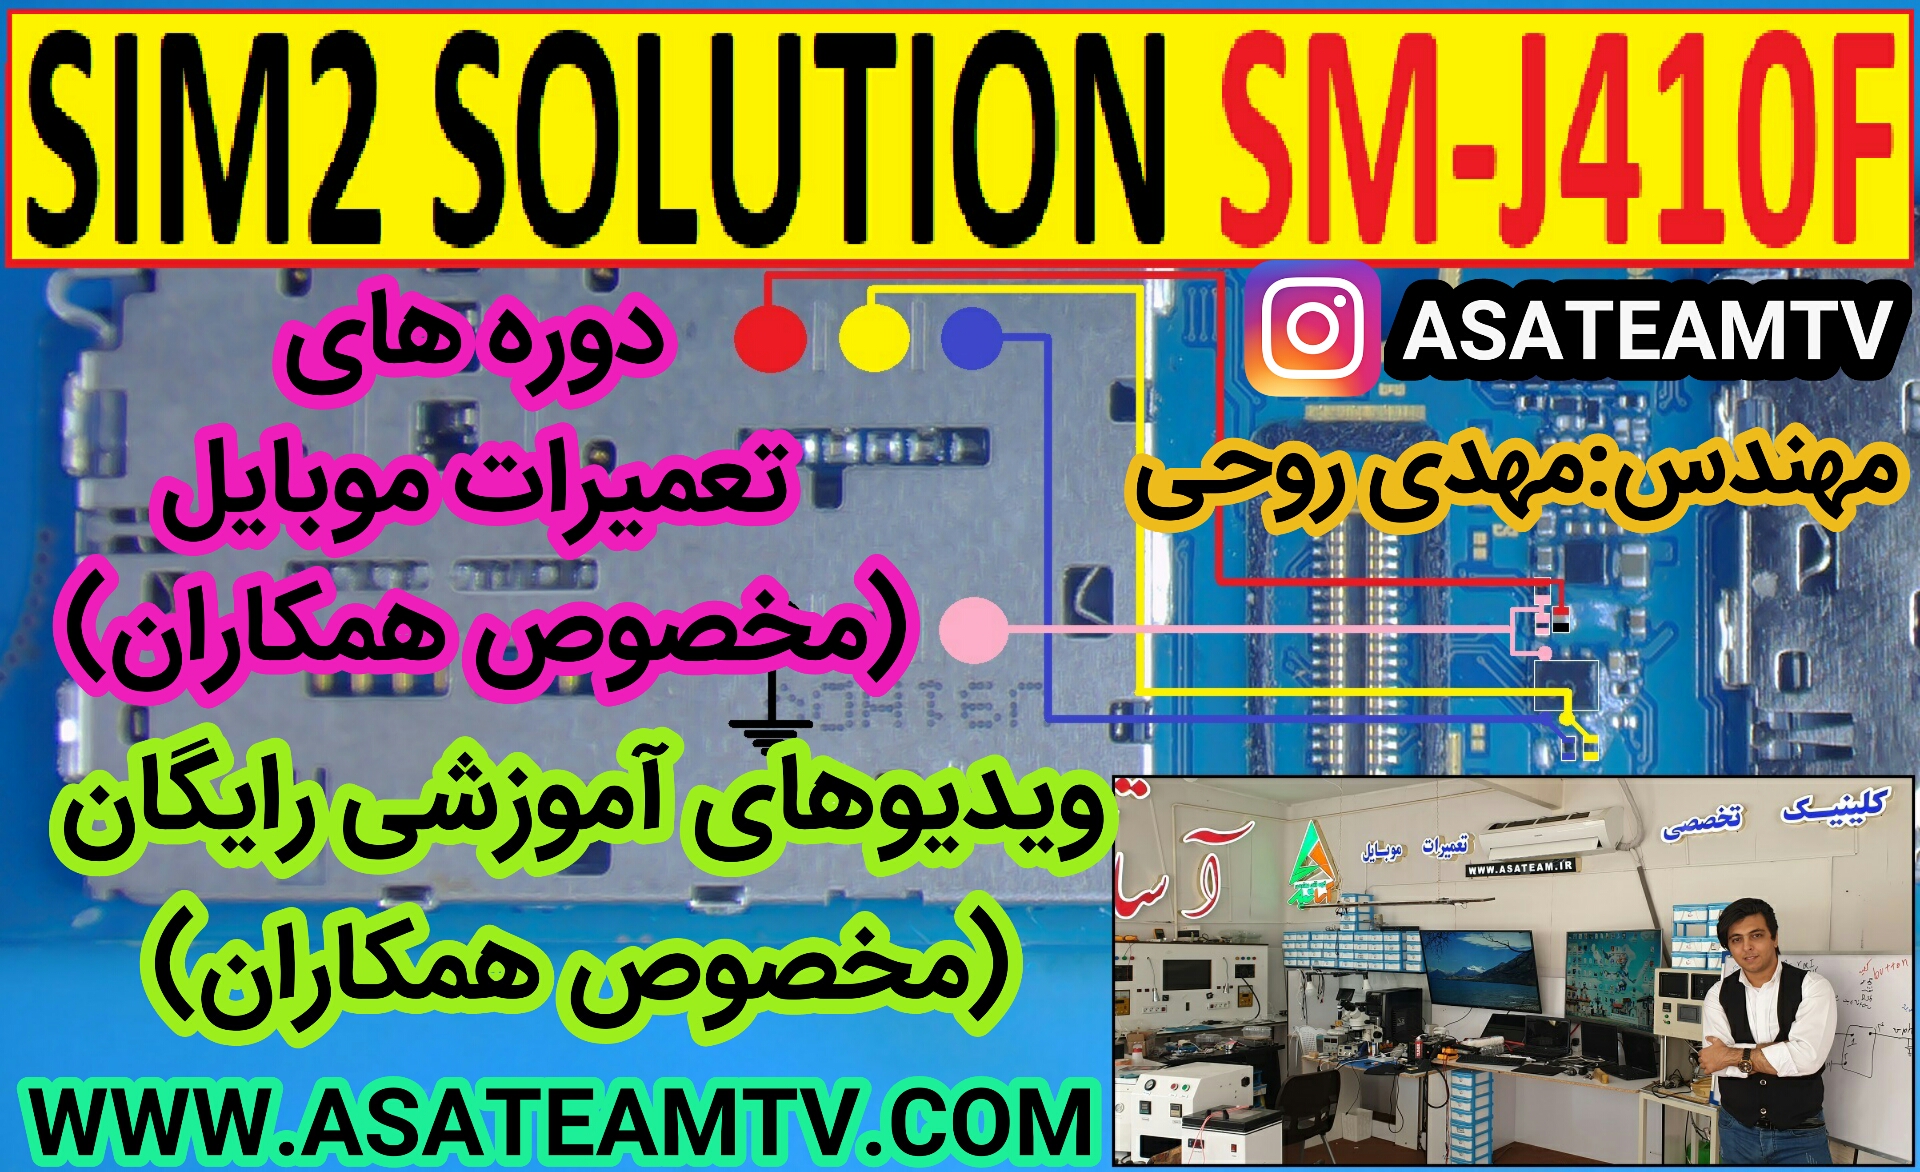 SIM2 SOLUTION J410F